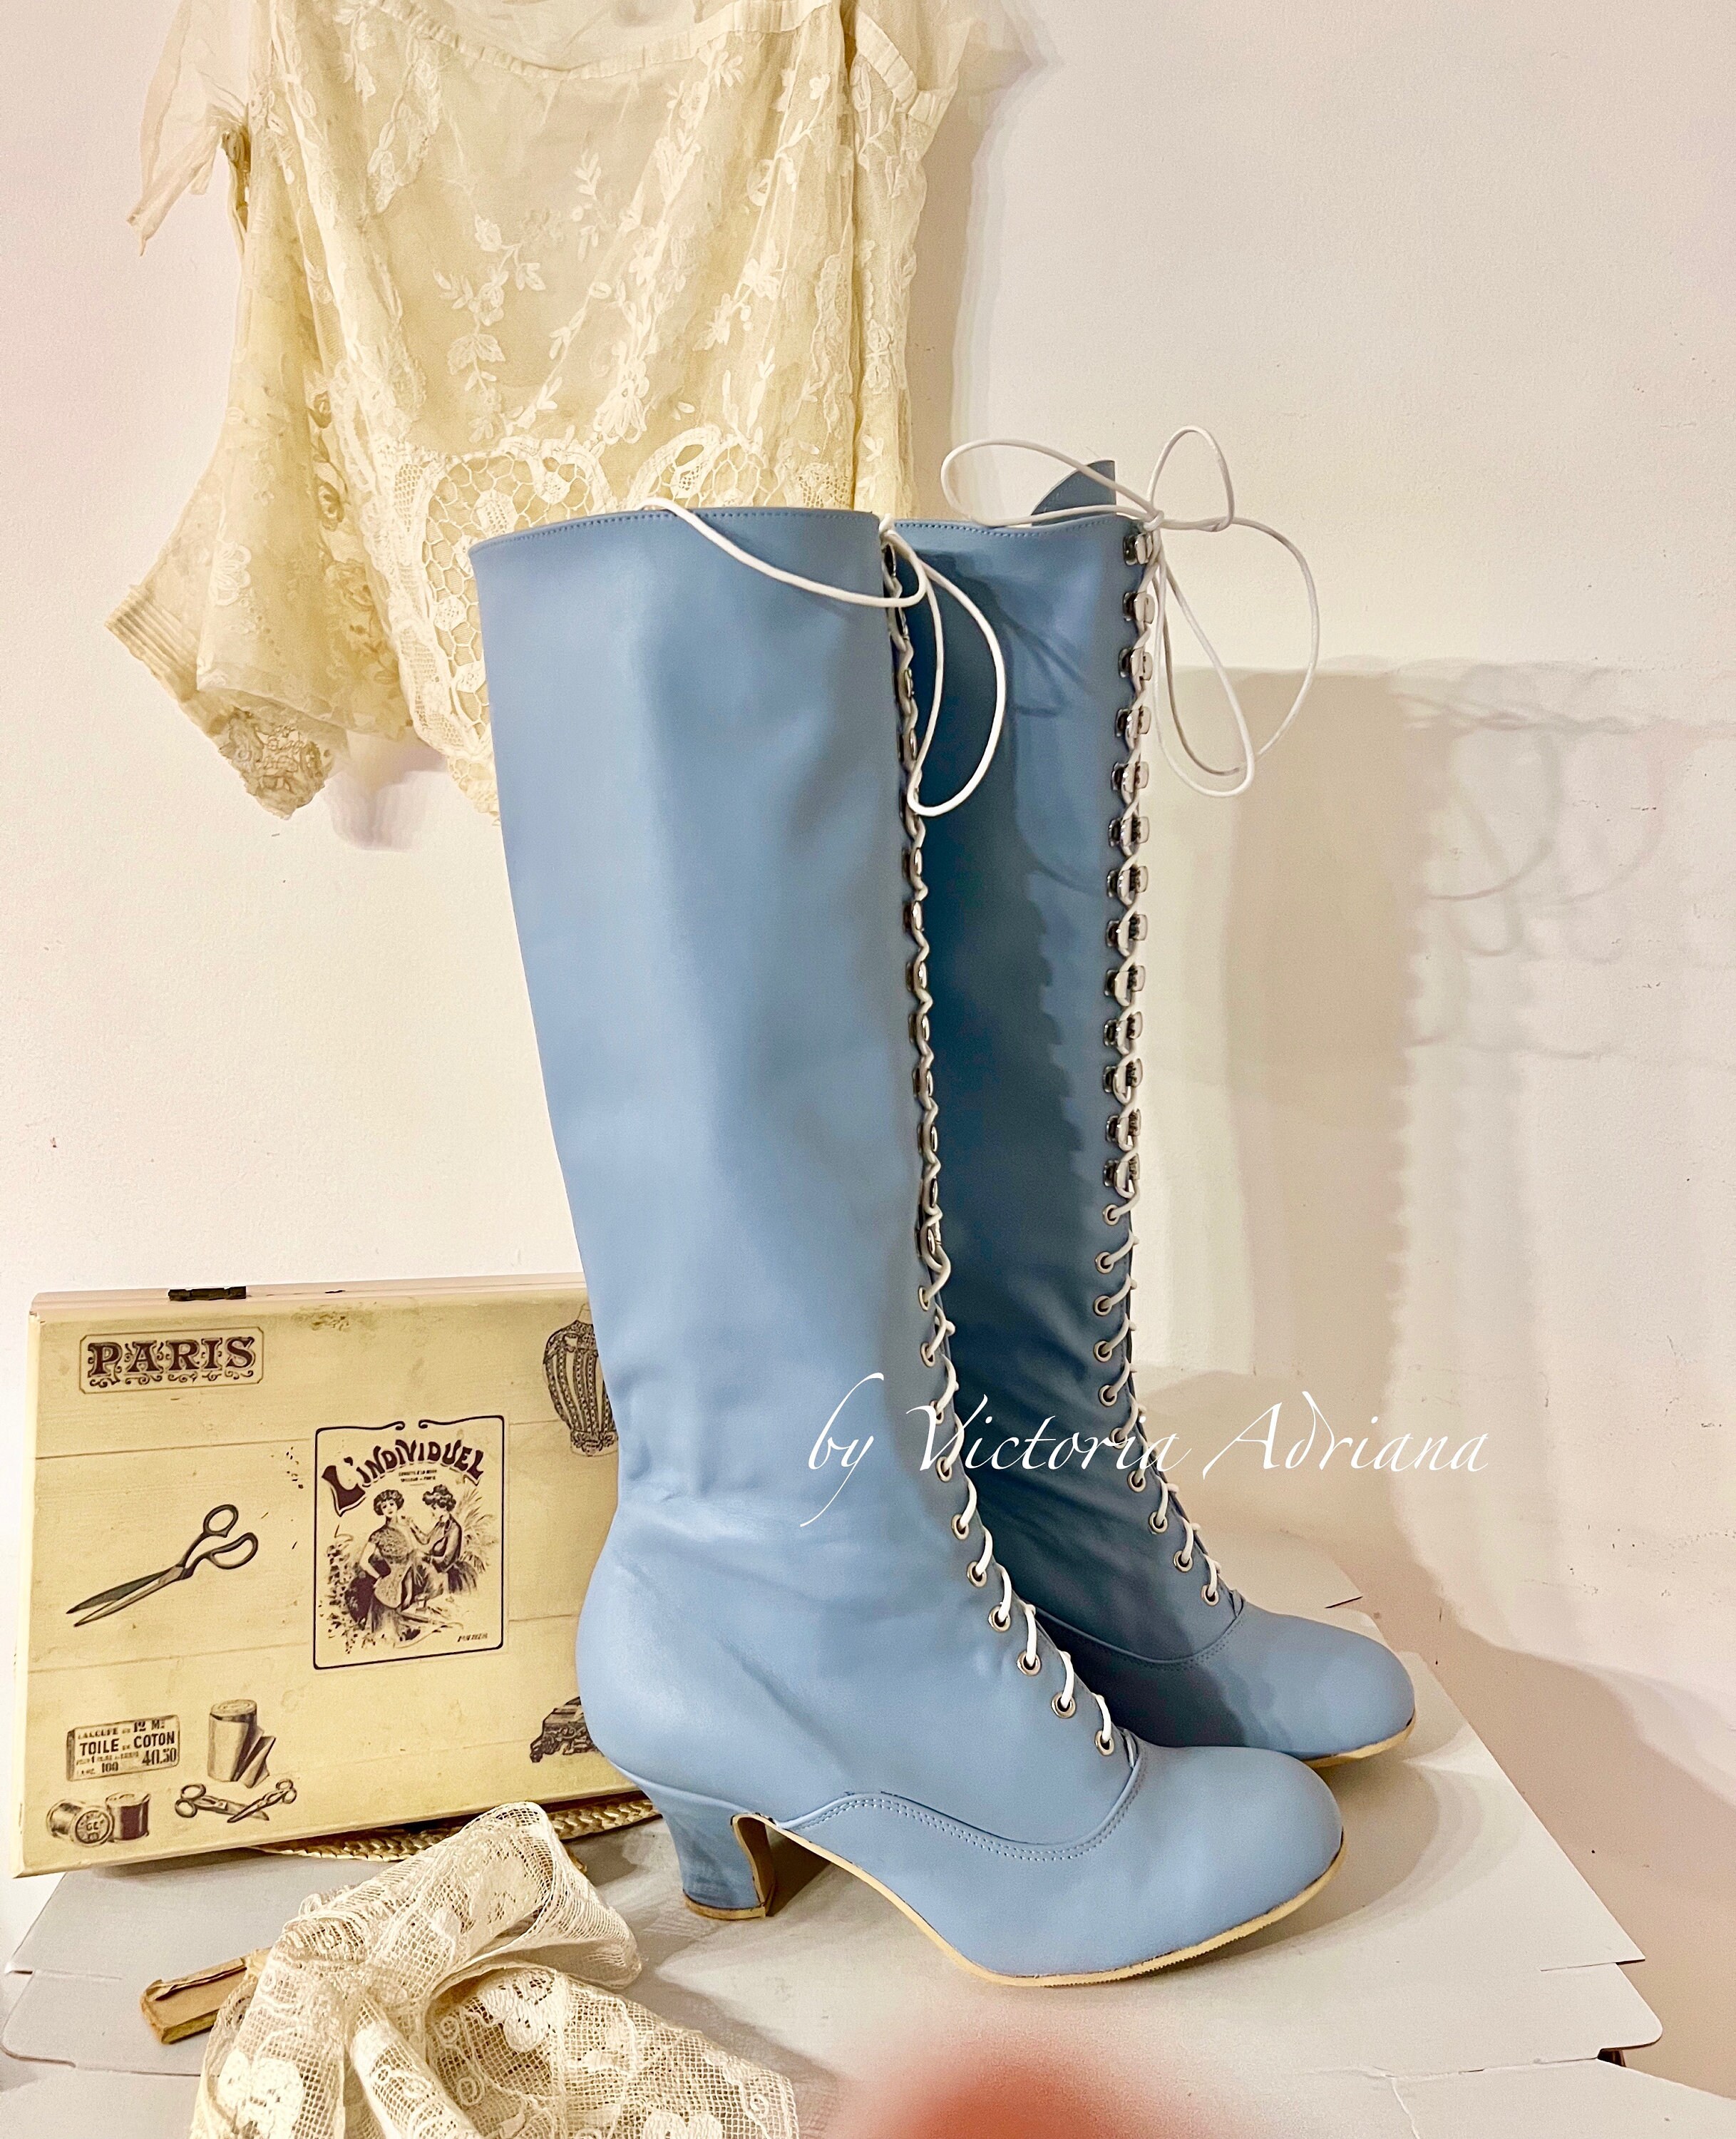 2021 Leather 'CC' Lace-Up Boots, Authentic & Vintage